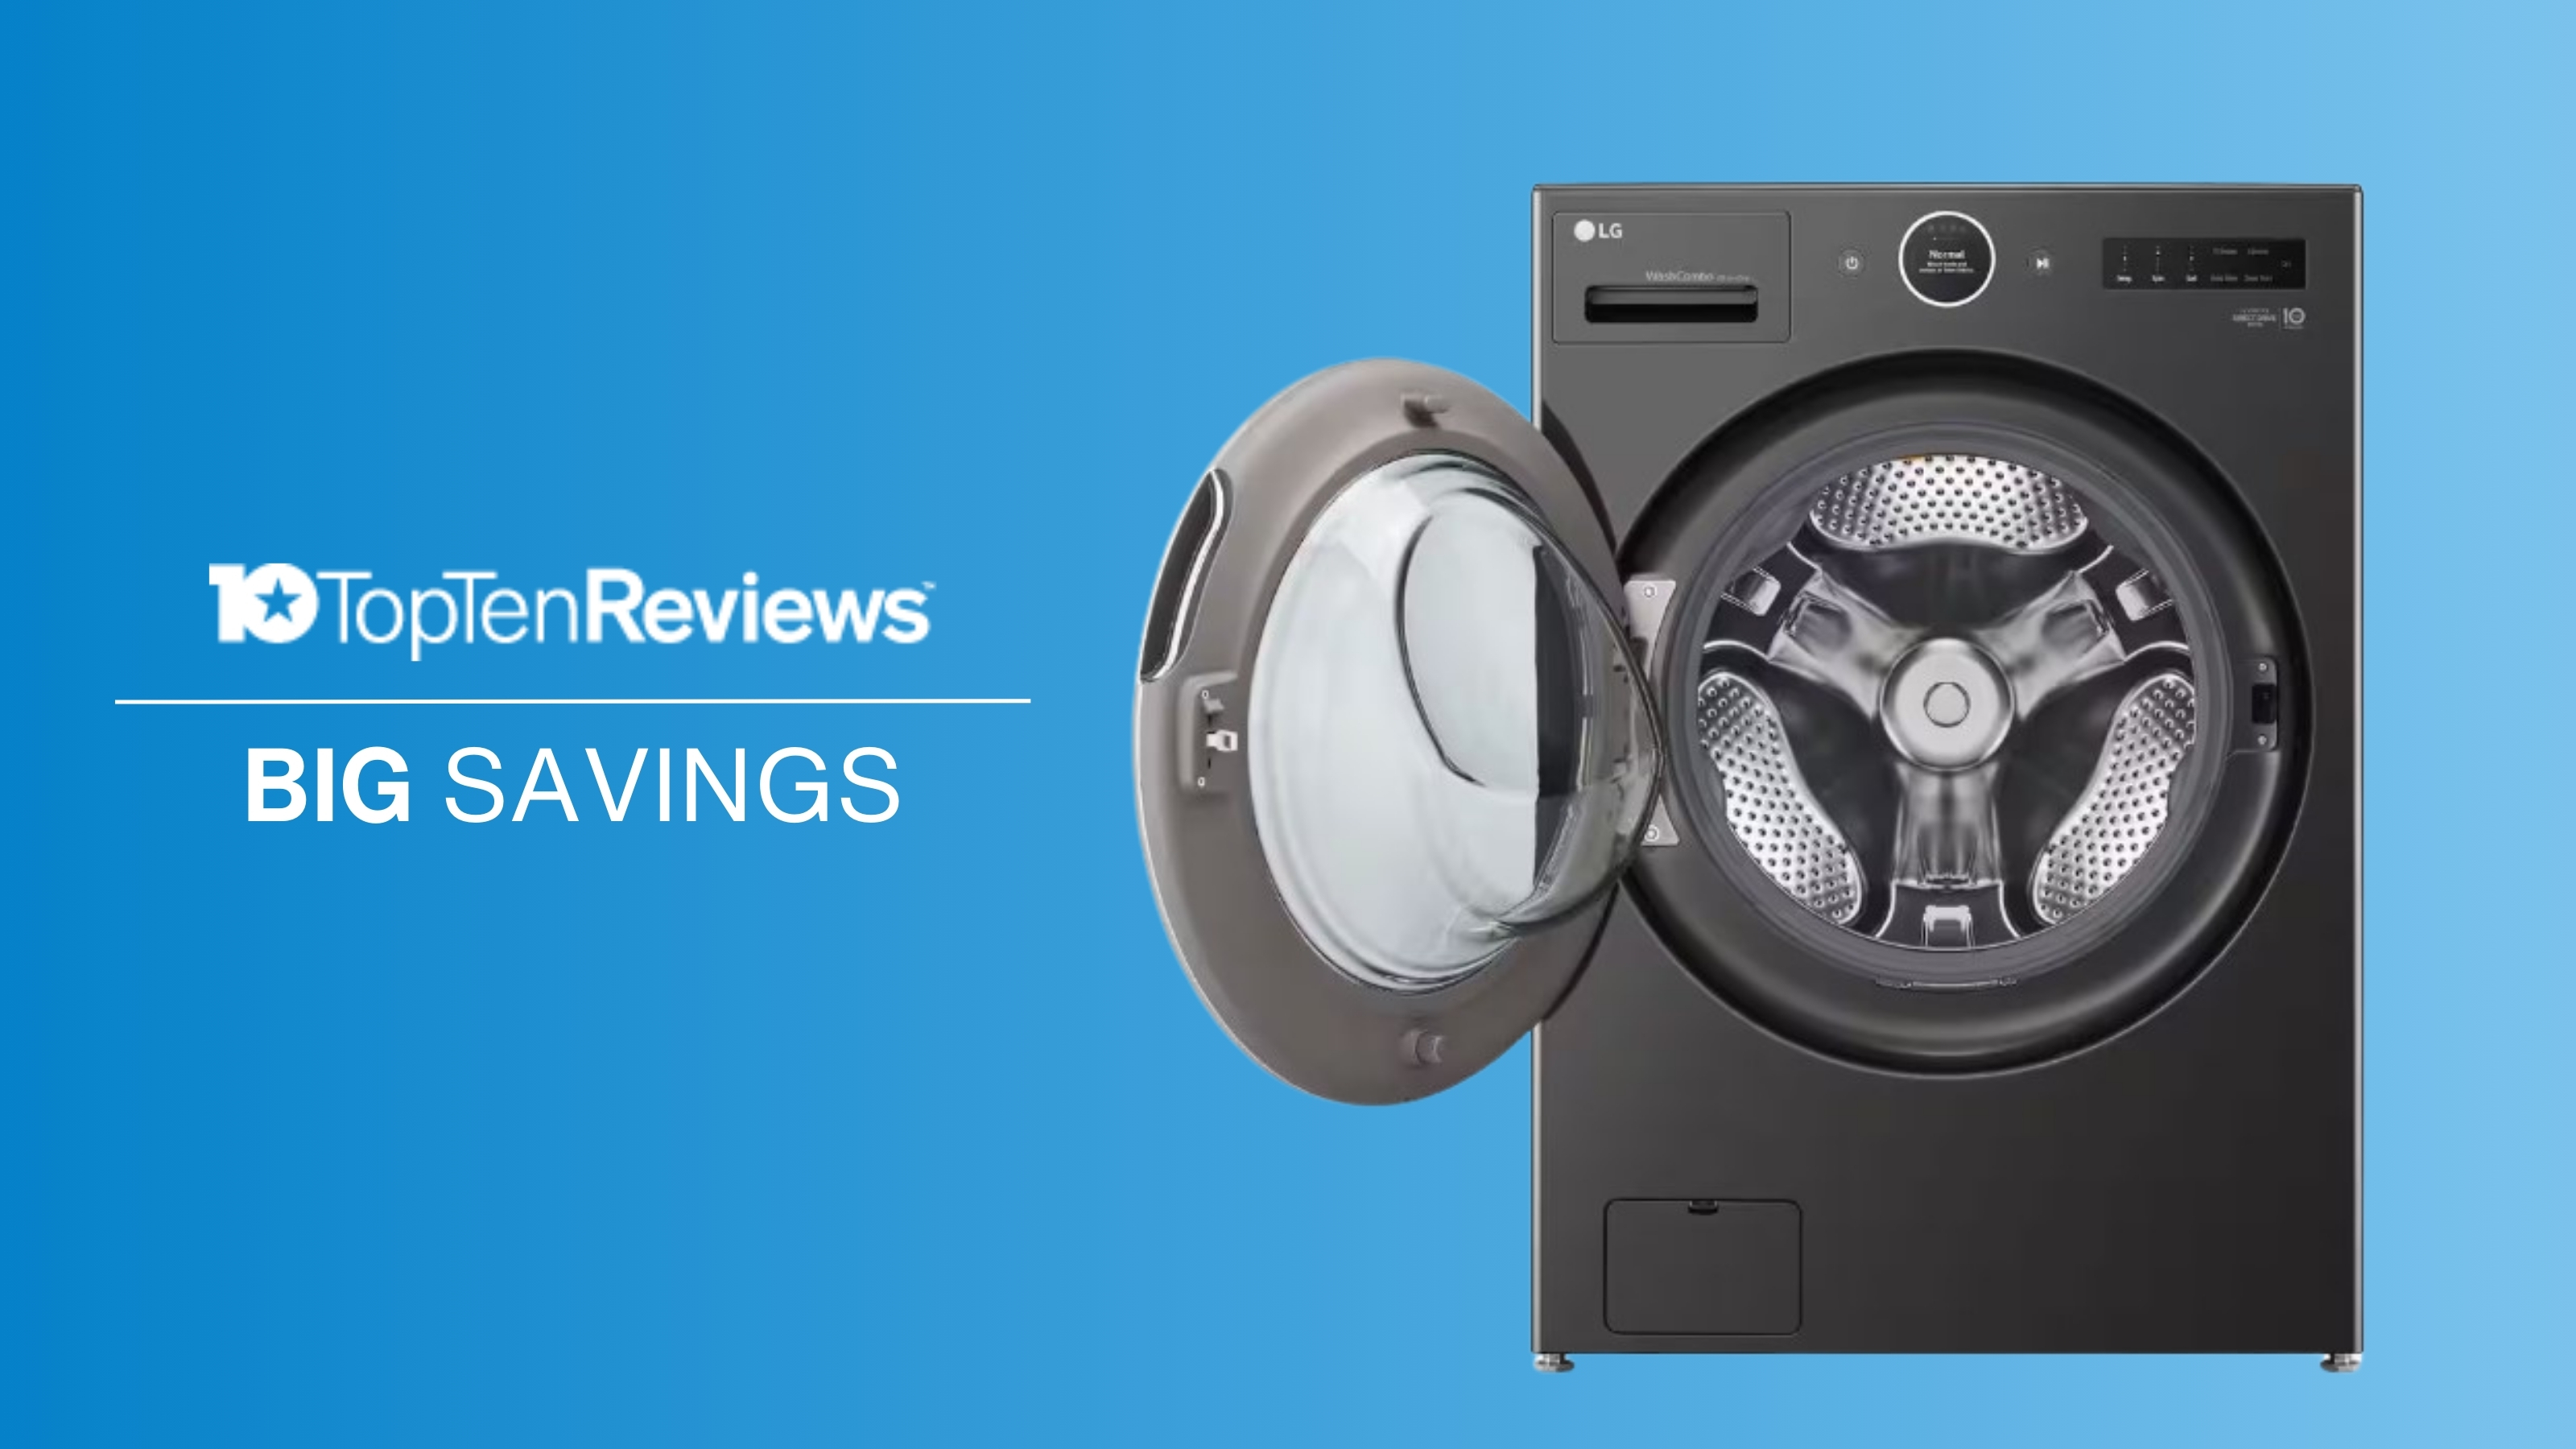 Morus Zero Ultra-Fast Portable Clothes Dryer review